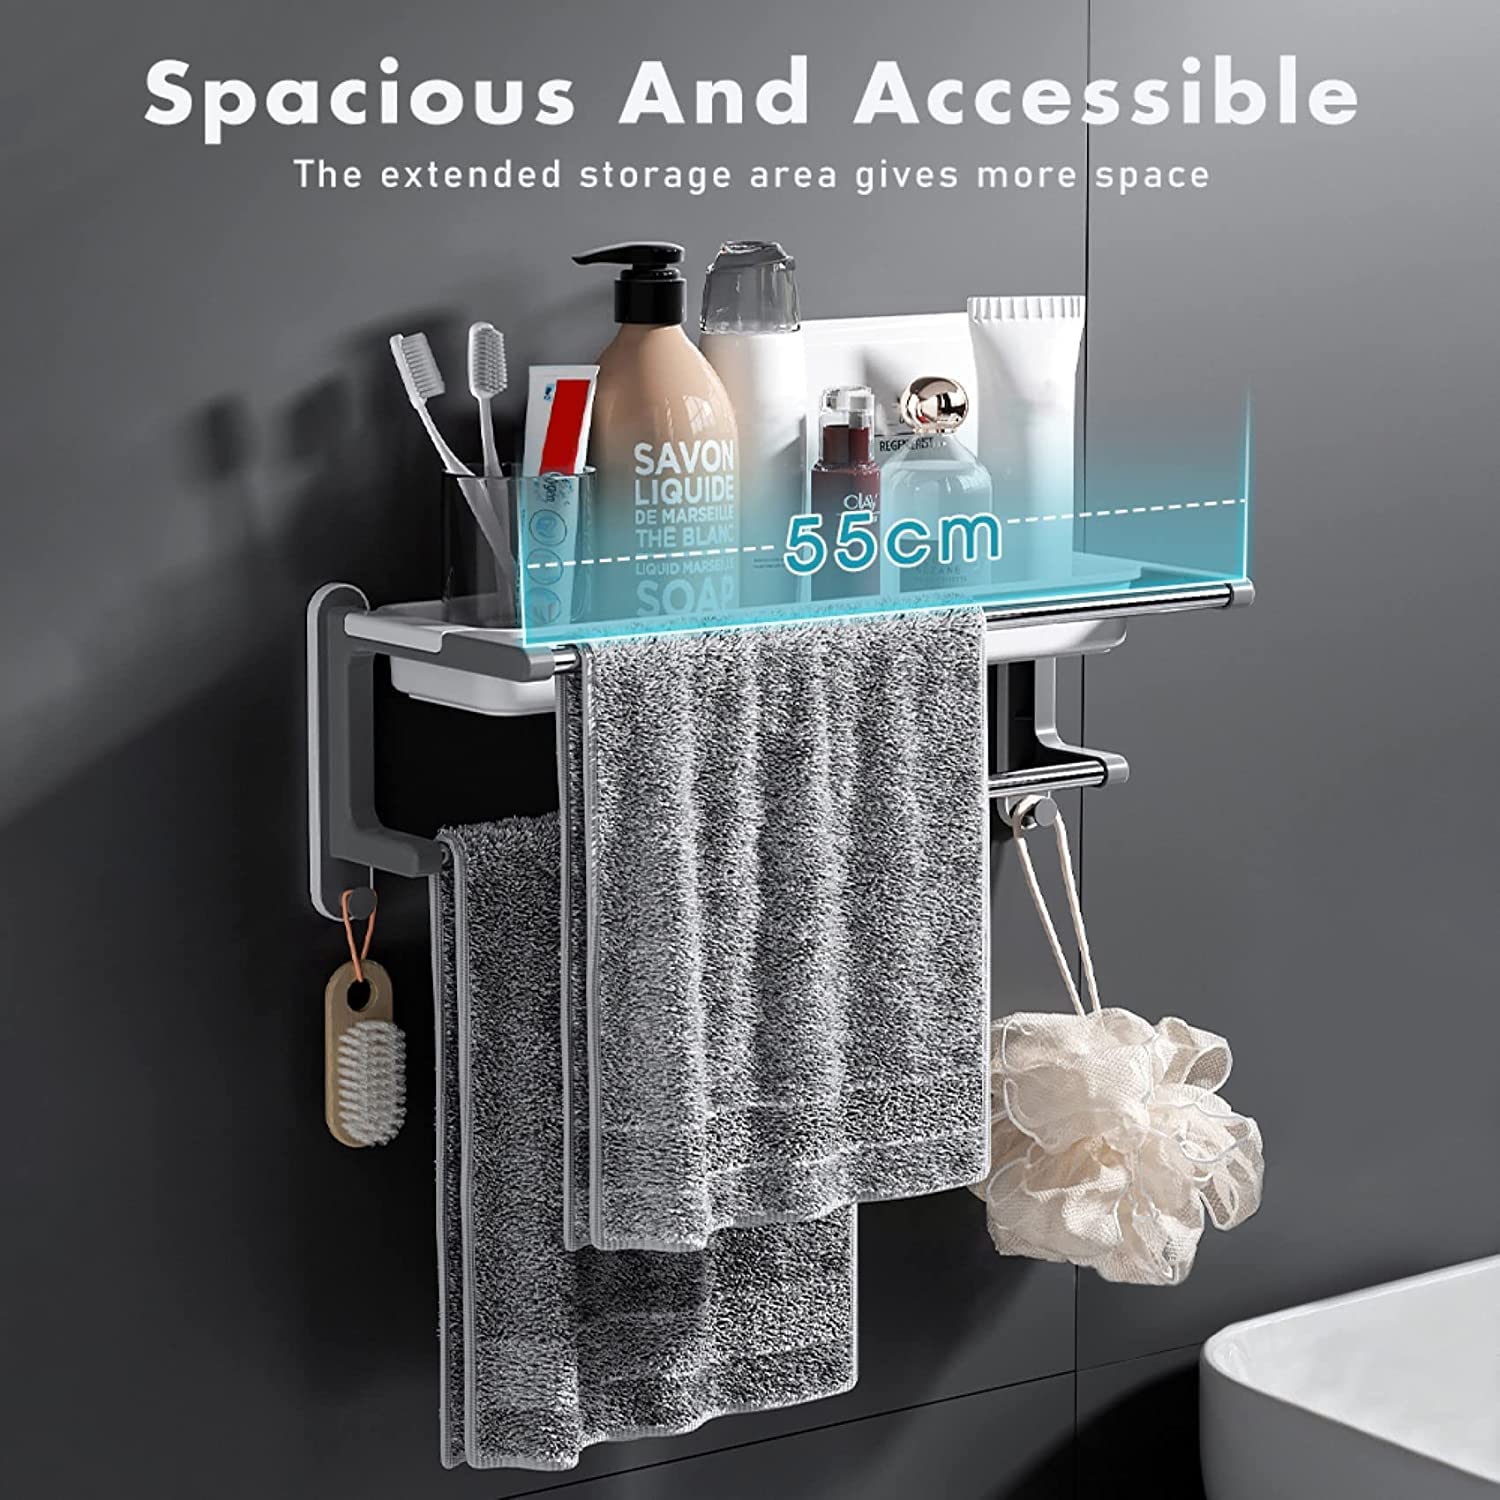 Primax Bathroom Accessories-Bathroom Shelf/Towel Rack/Multipurpose Self-Adhesive Wall-Mount Shelf with Towel Hanger/Bathroom Organizer - White (Pack of 1)